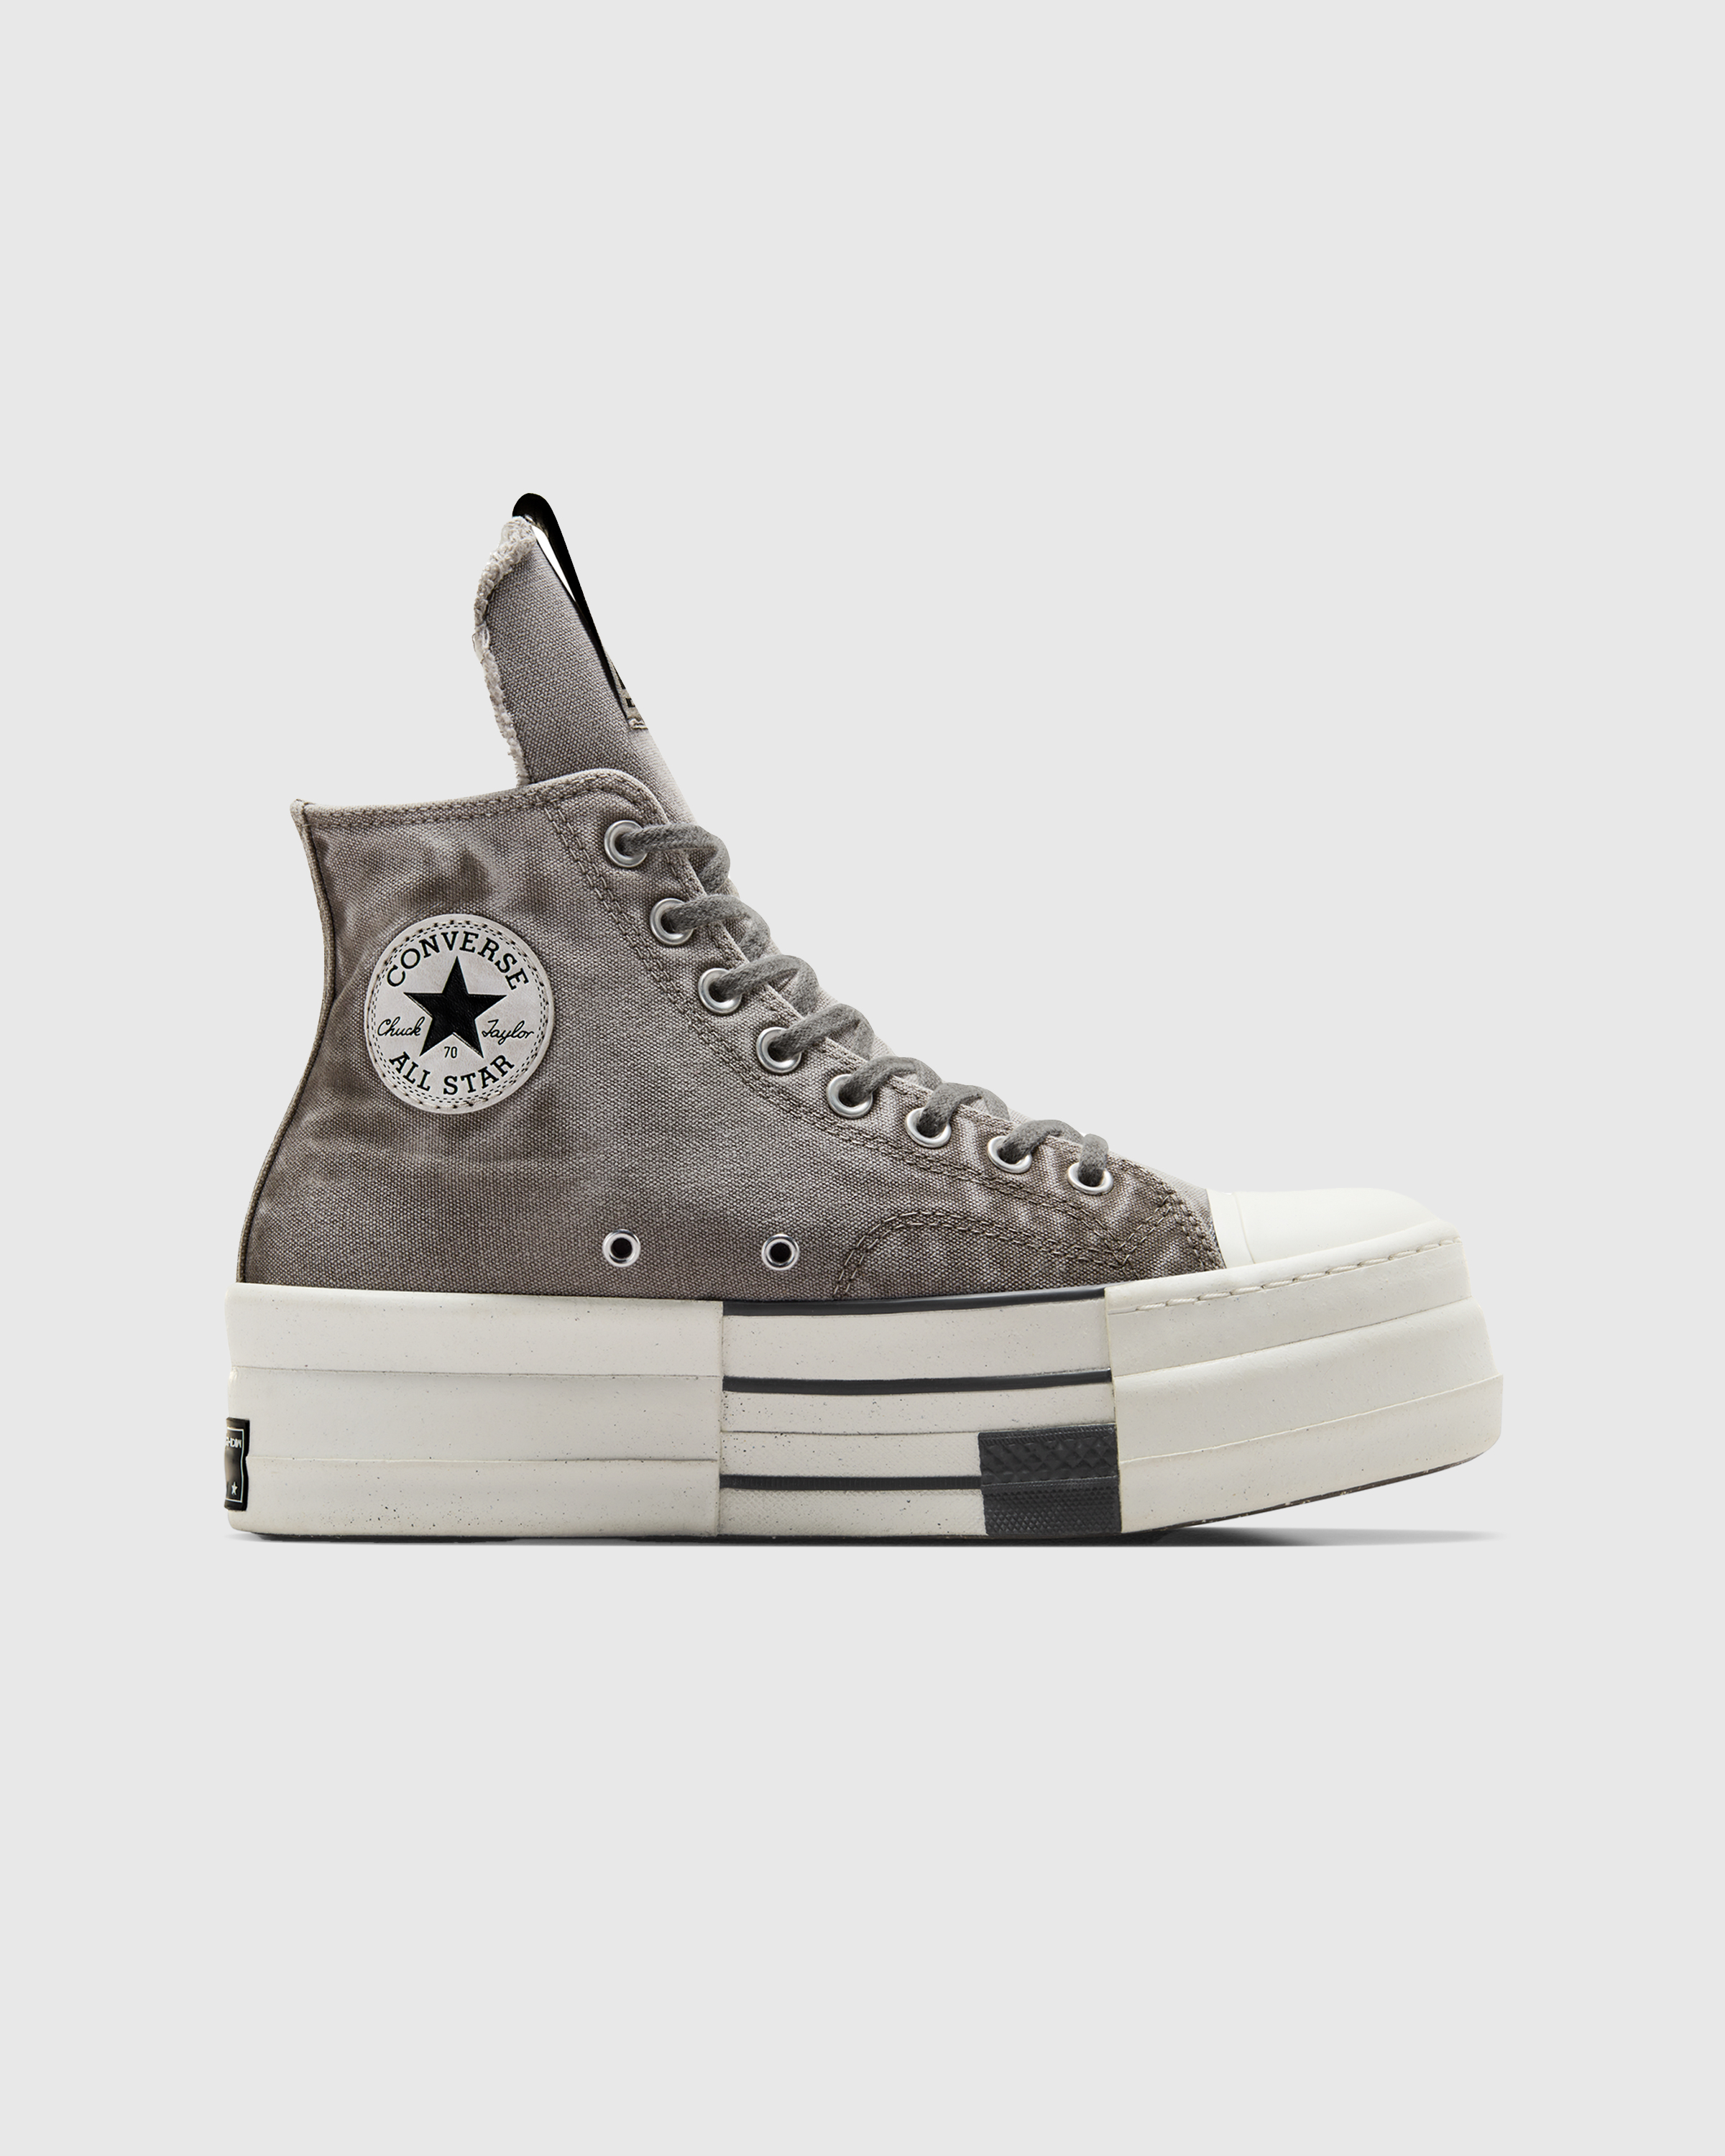 Converse x DRKSHDW – DBL DRKSTAR Chuck 70 Hi Concrete - High Top Sneakers - Grey - Image 1